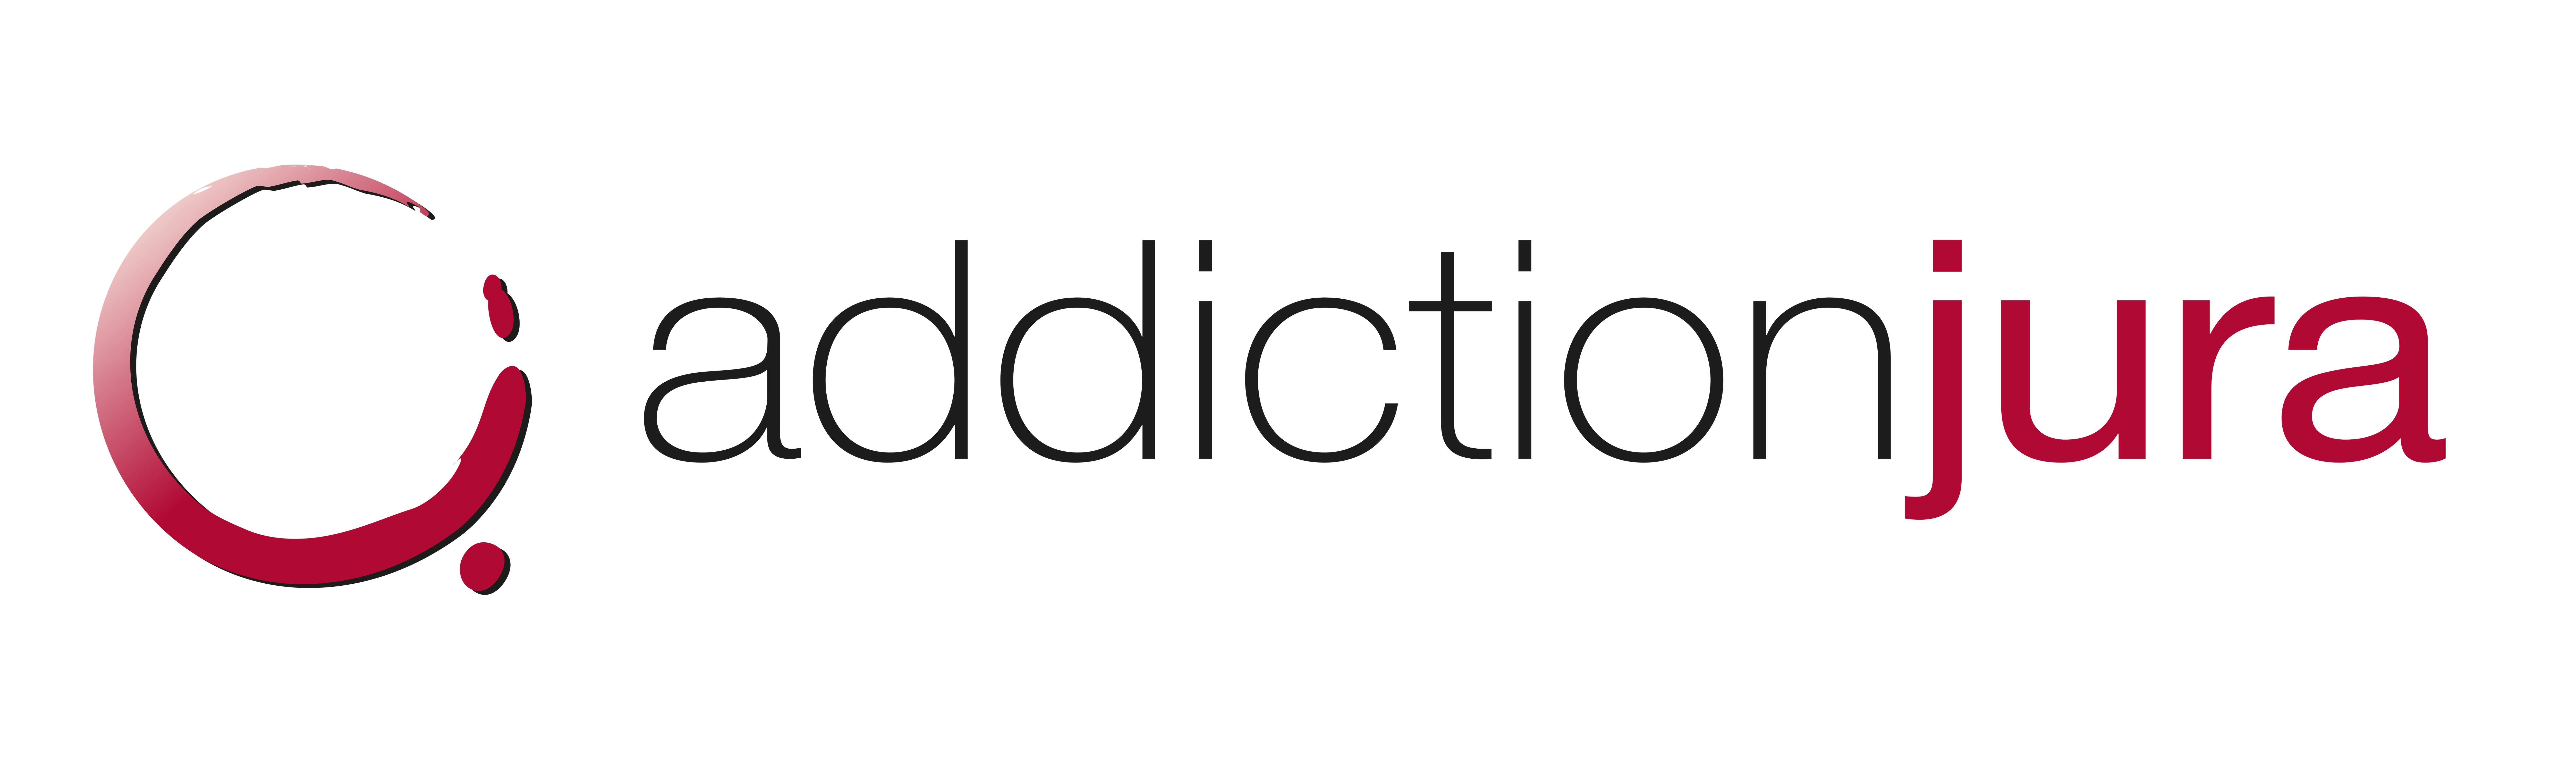 Addiction-jura_logo-ligne Fondation O2